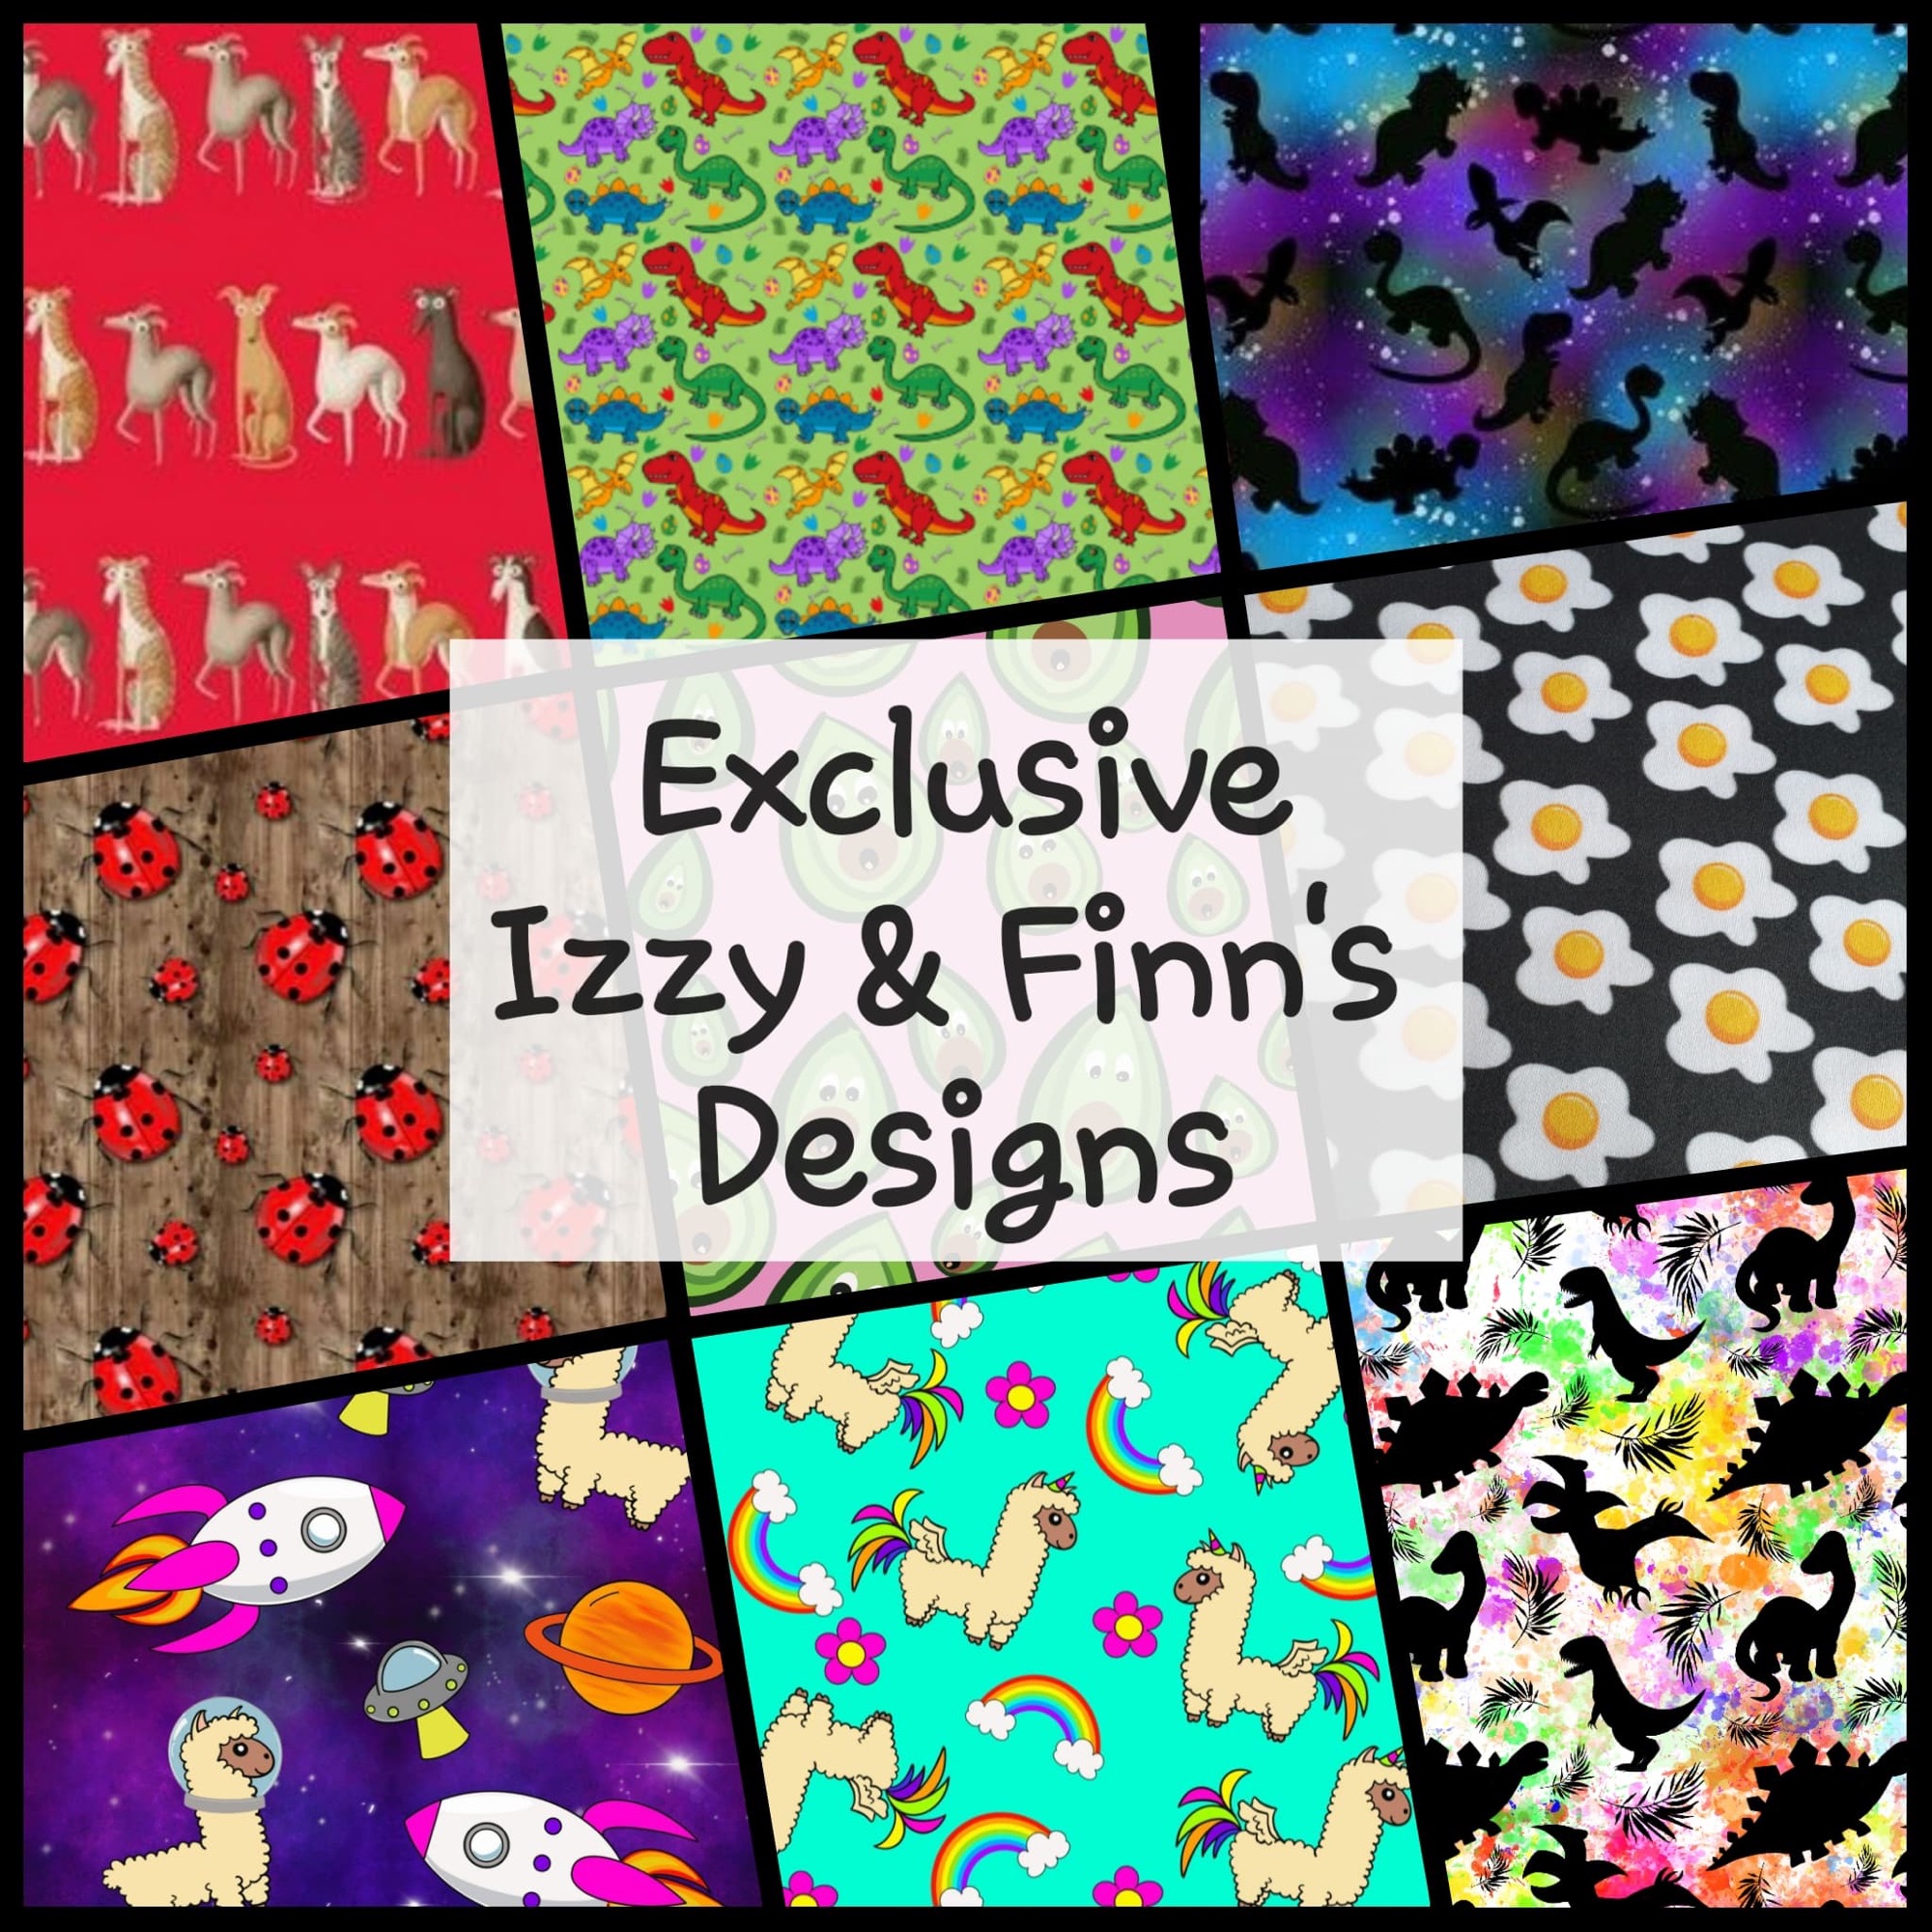 Exclsusive Izzy & Finn's Designs